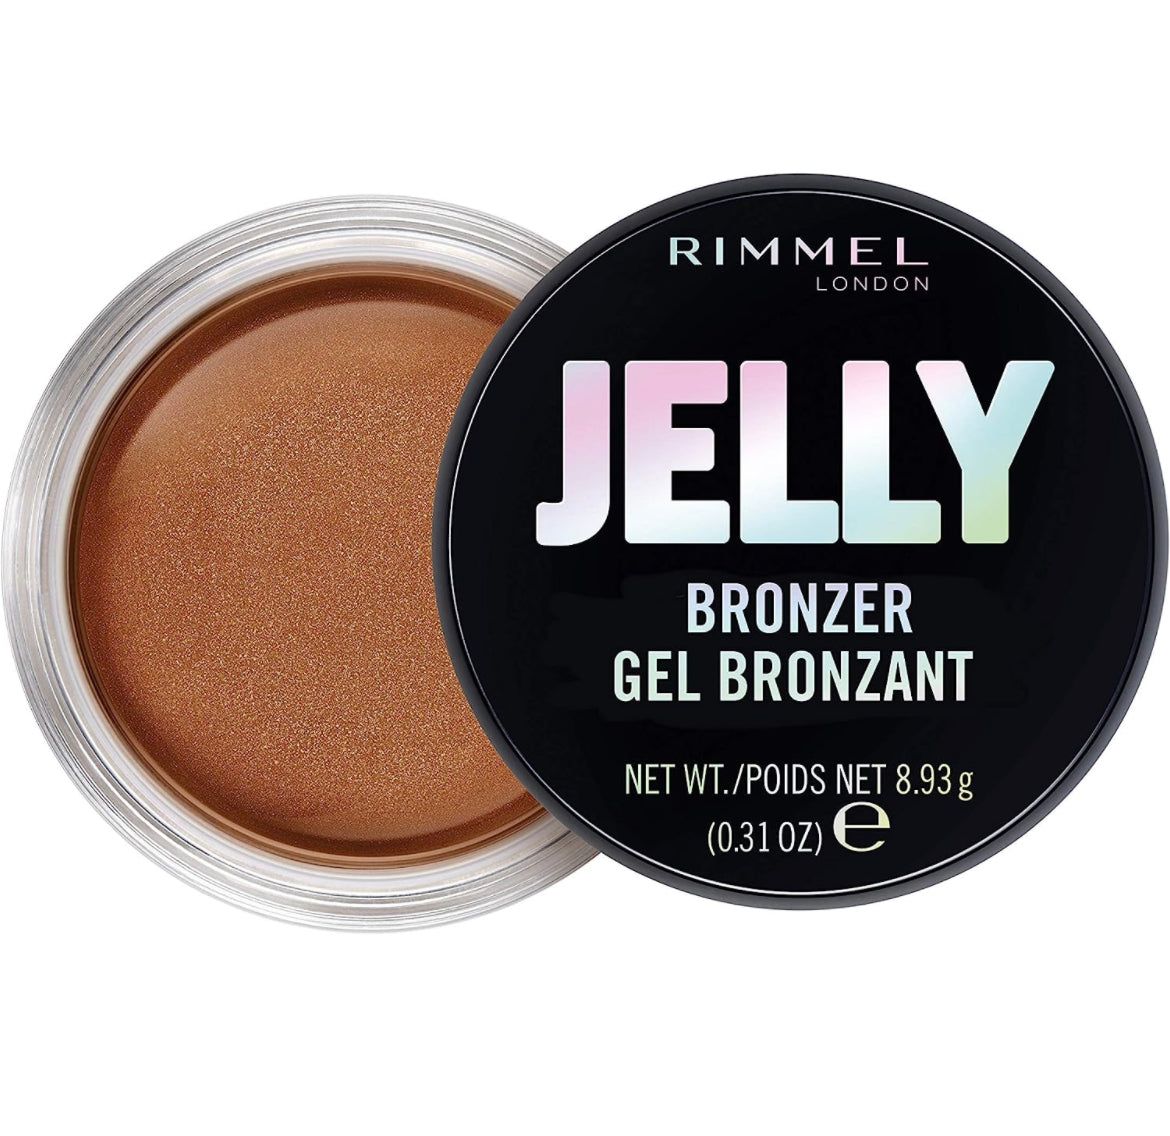 Rimmel Jelly Bronzer Golden Touch shade 002